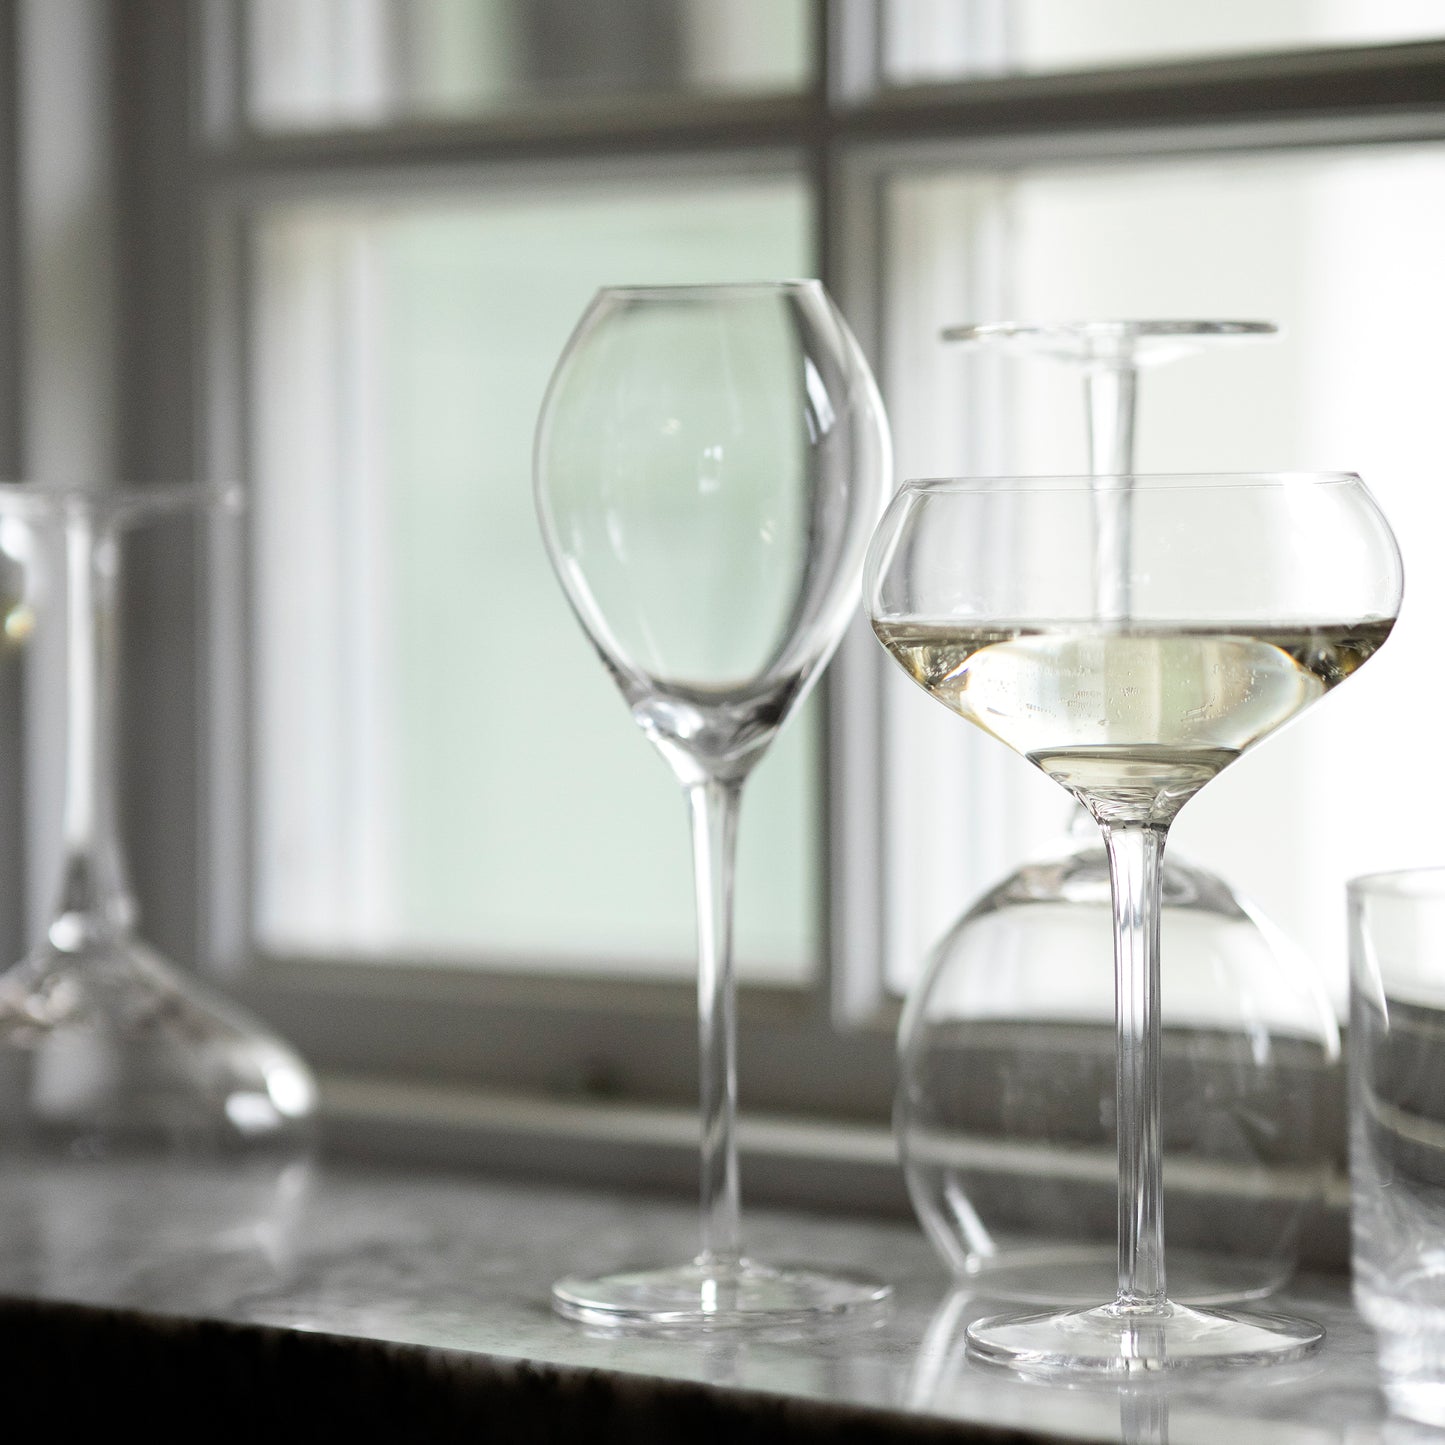 Sagaform Champagne Glasses, Set of 2  Widgeteer Inc.   5018264 Champagne Glasses 0008 5018263 5018264 5018265 5018268